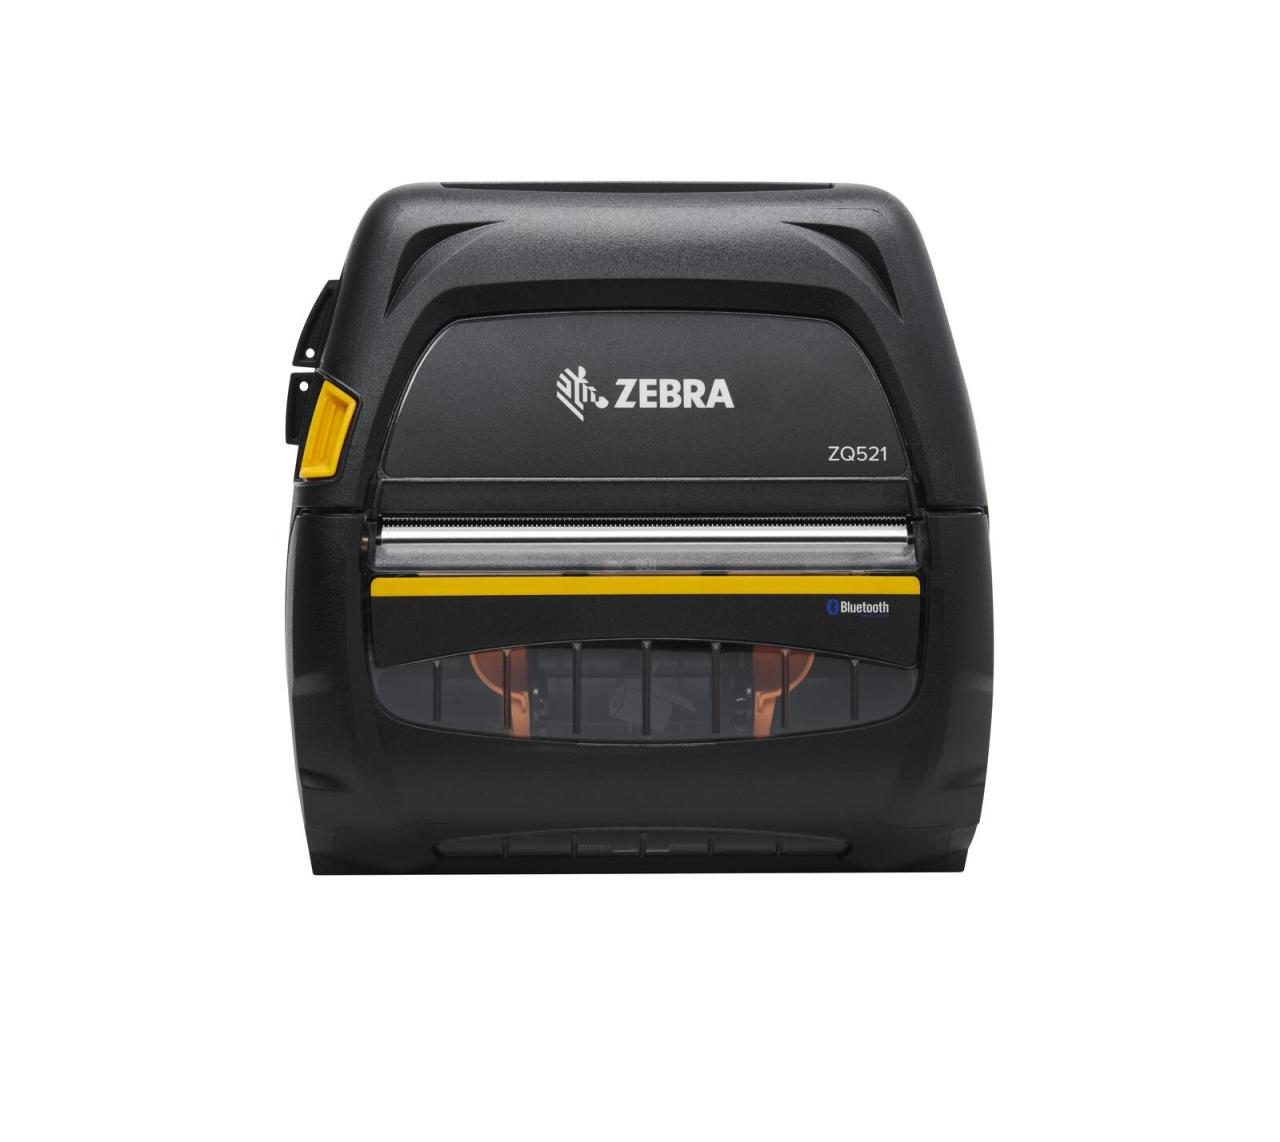 Zebra ZQ521 mobiler Drucker von Zebra Technologies